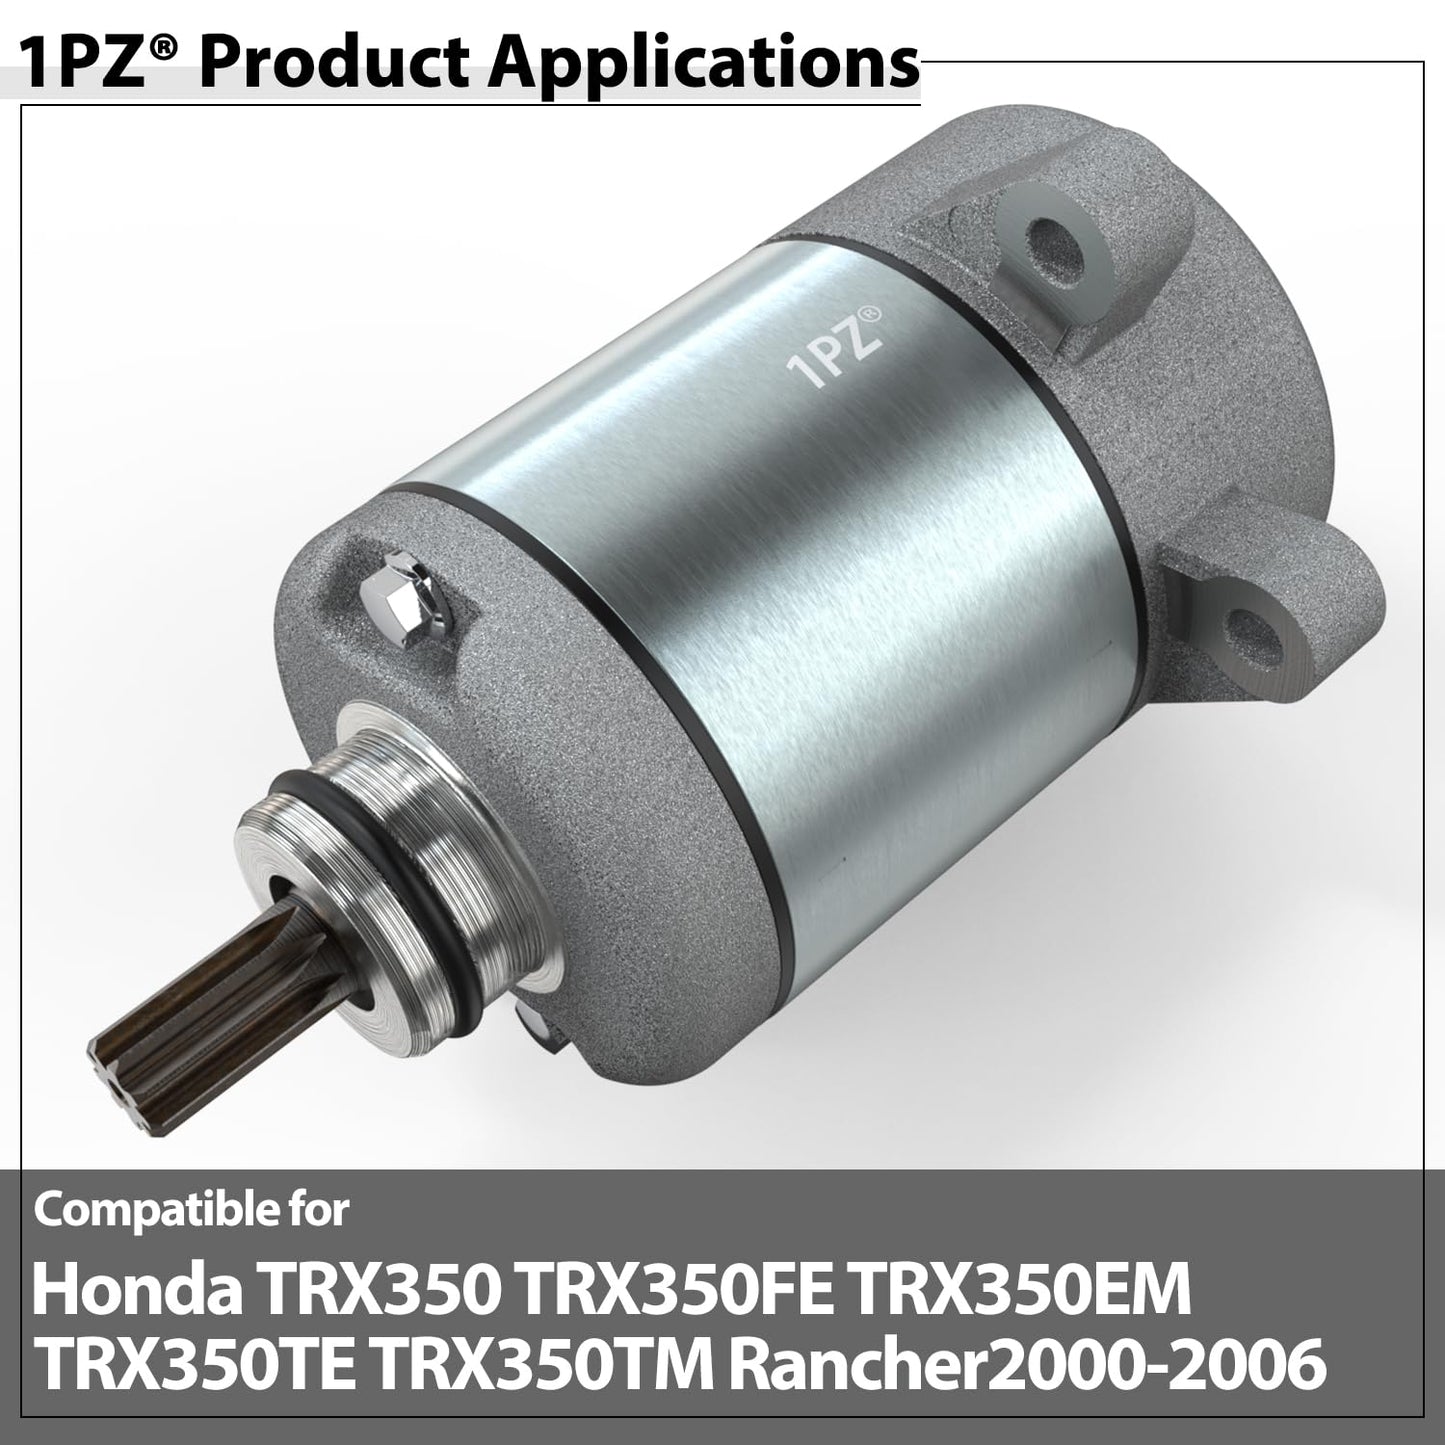 1PZ TR3-NS1 Starter Motor Replacement for Honda Rancher 350 TRX350 TRX350FE TRX350FM TRX350TE TRX350TM 2000-2006 31200-HN5-671 31200-HN5-A81 31200-HN5-M01